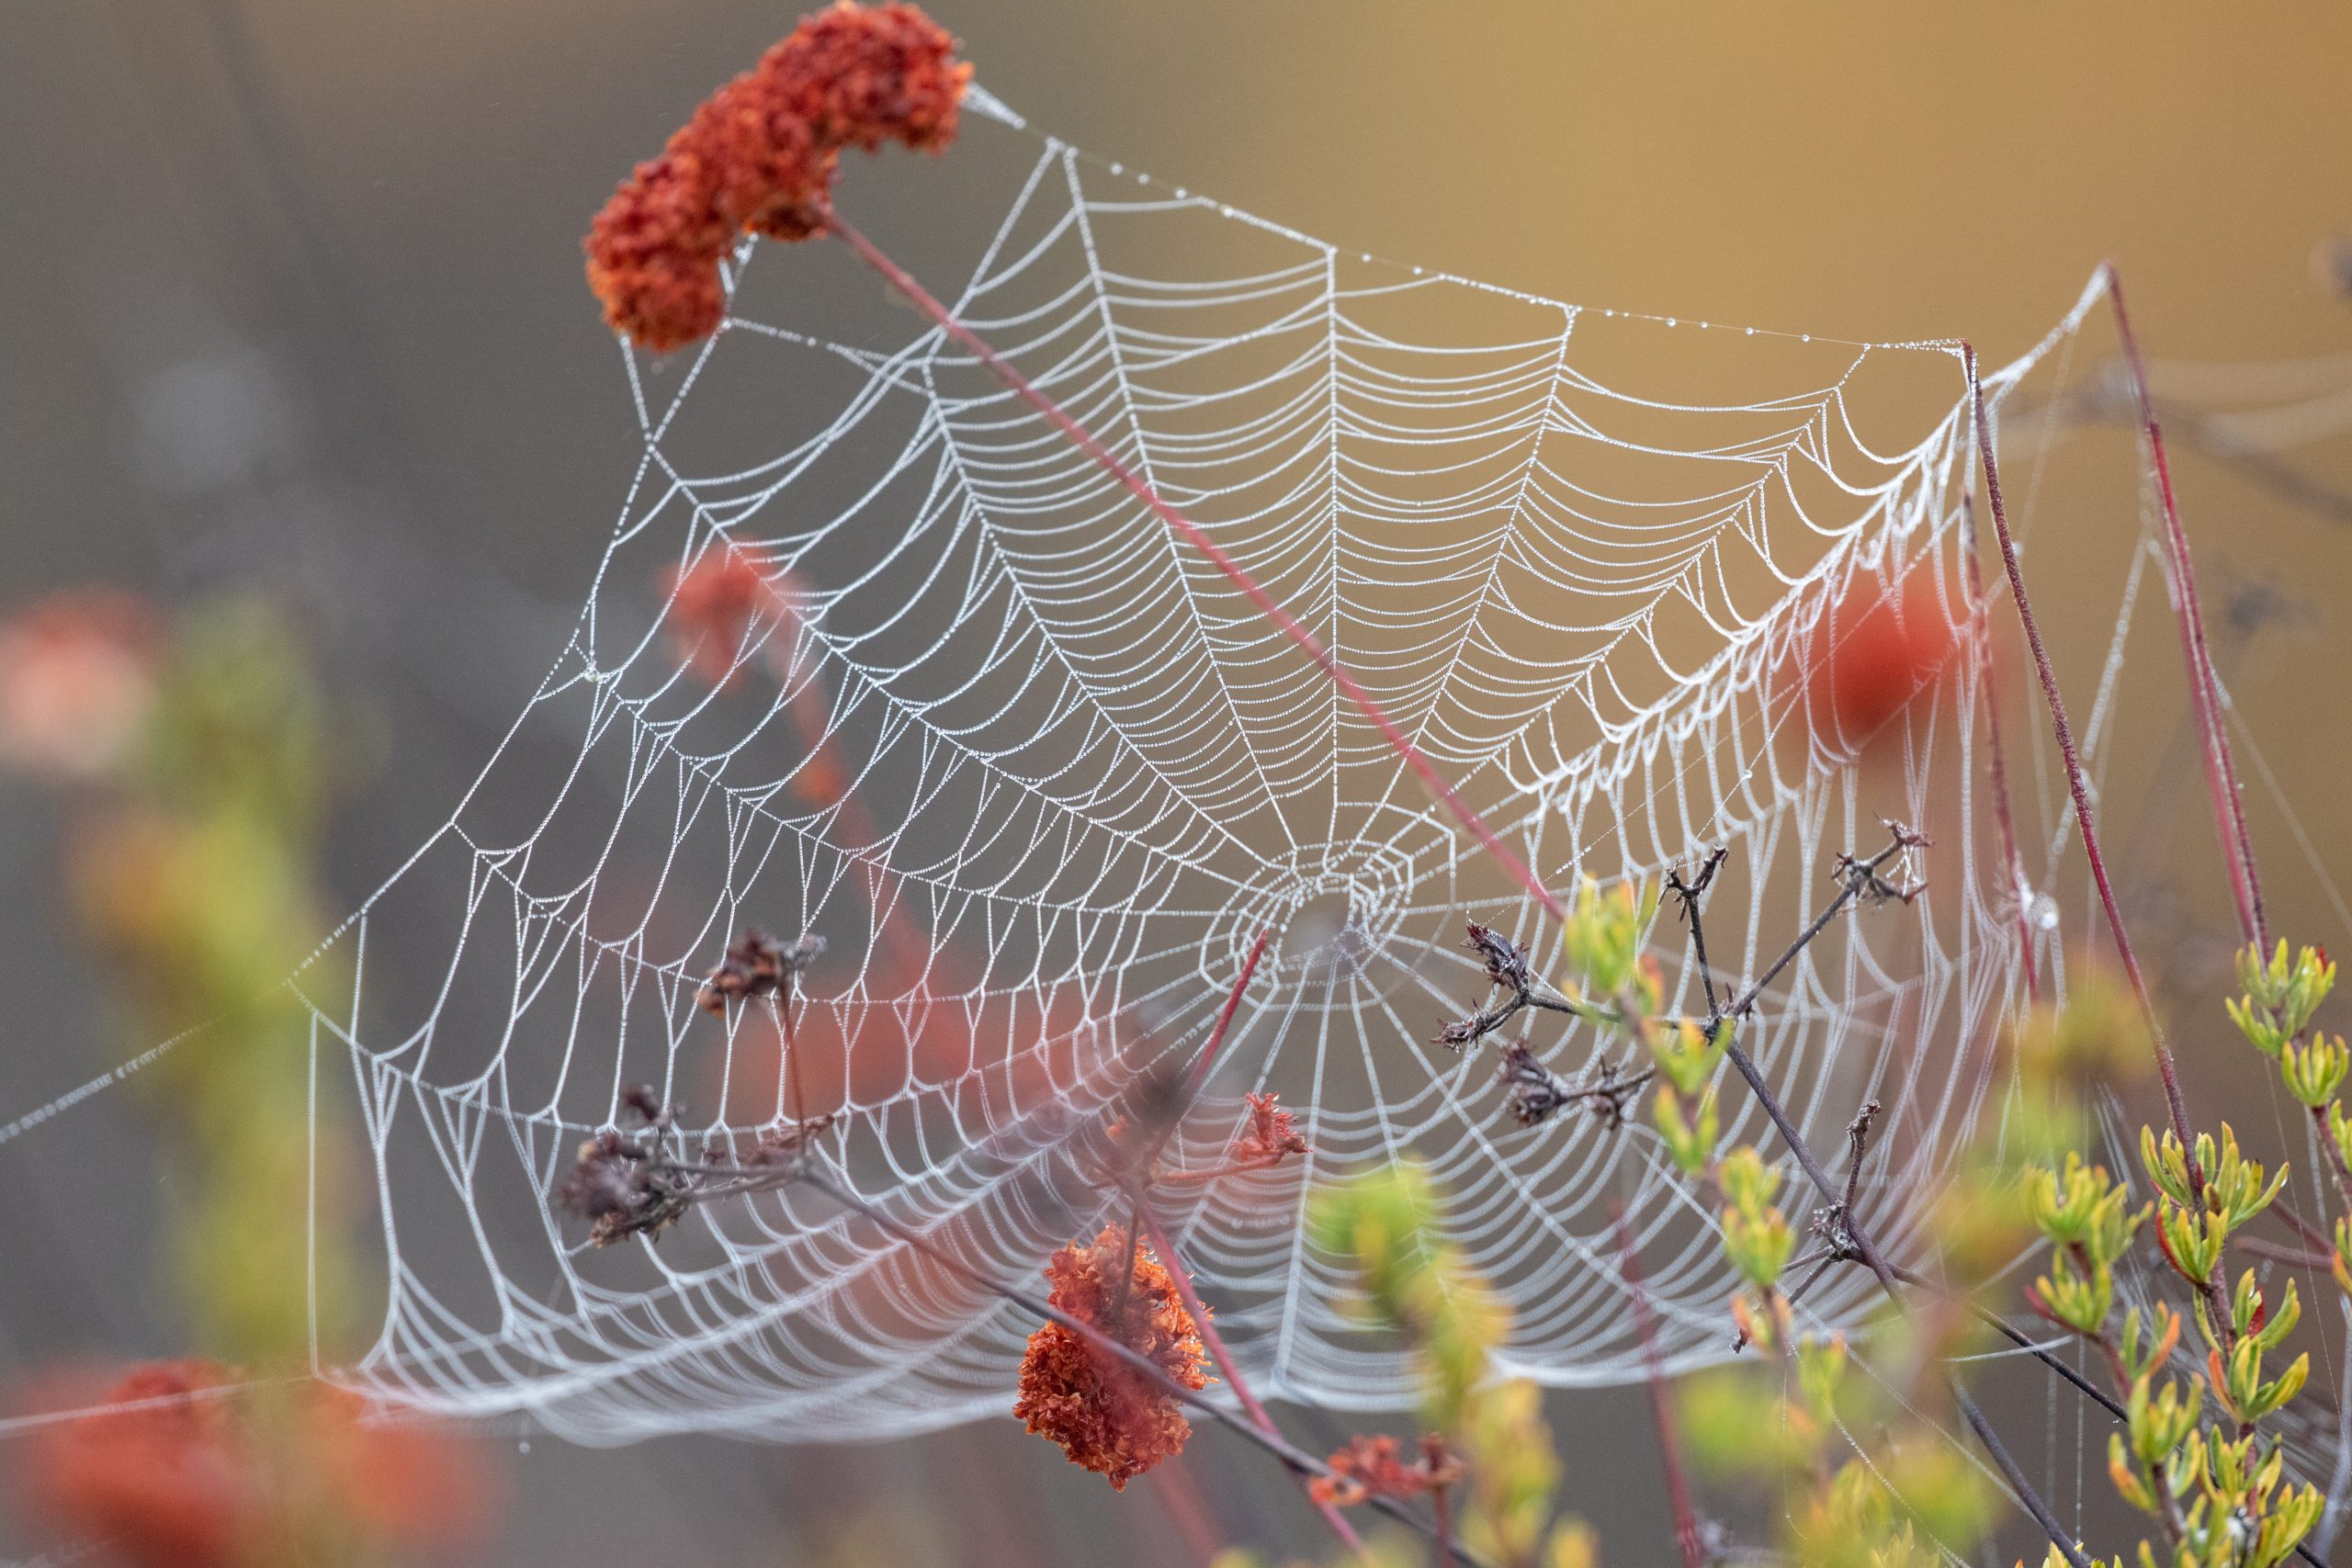 Spider web on plant